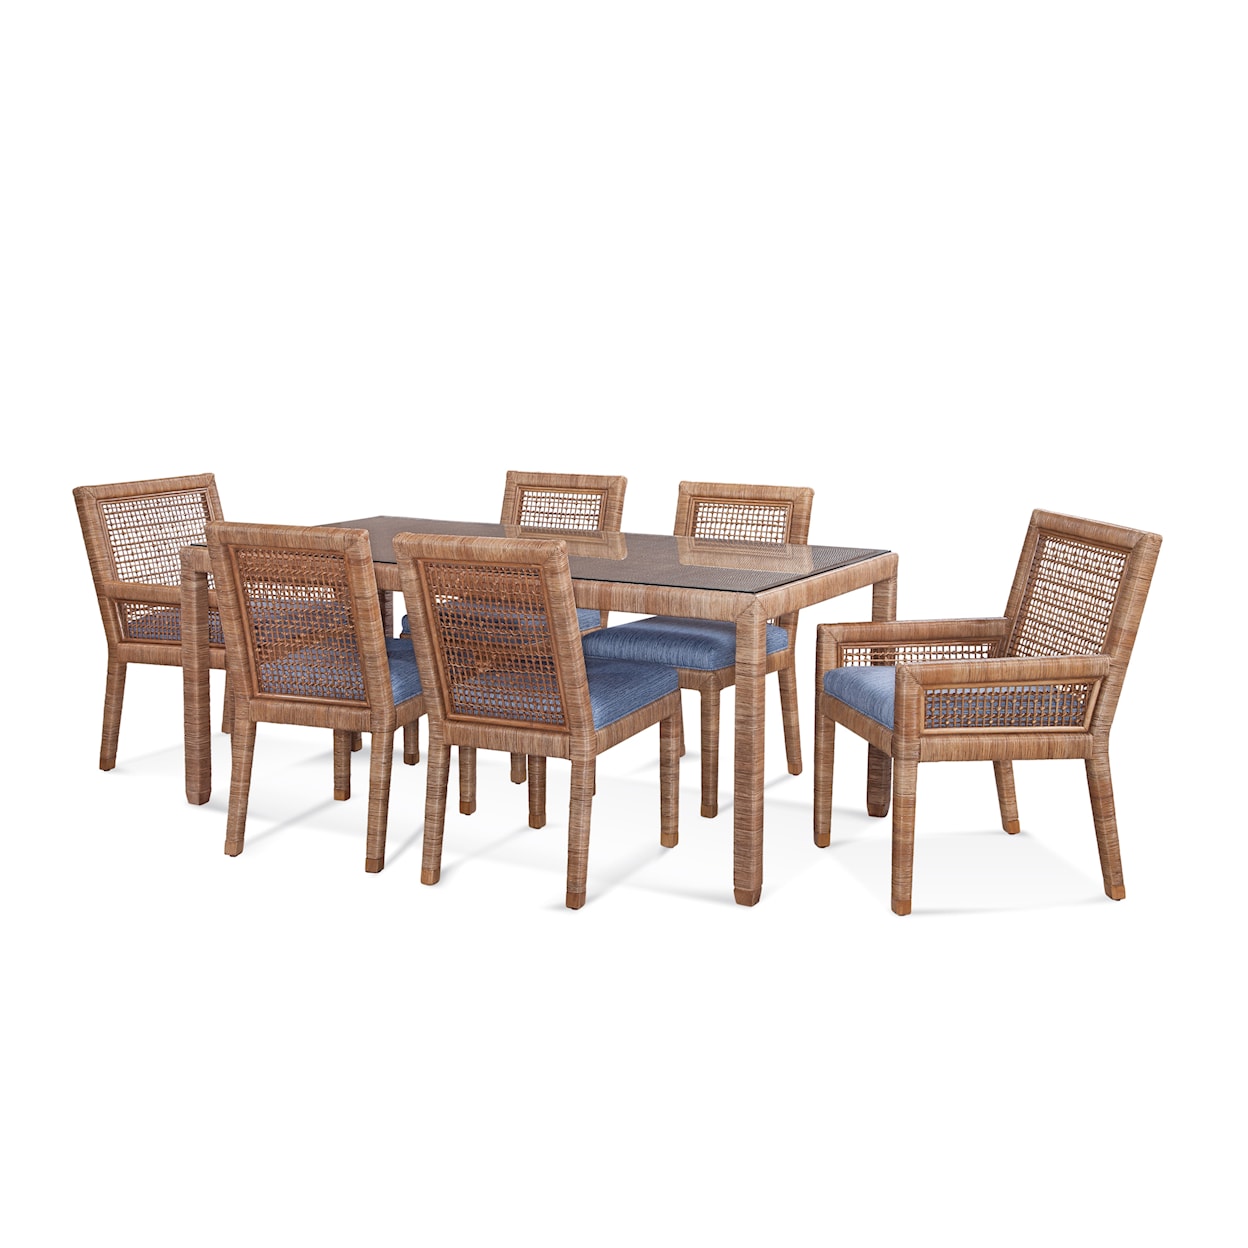 Braxton Culler Pine Isle Rectangular Dining Table